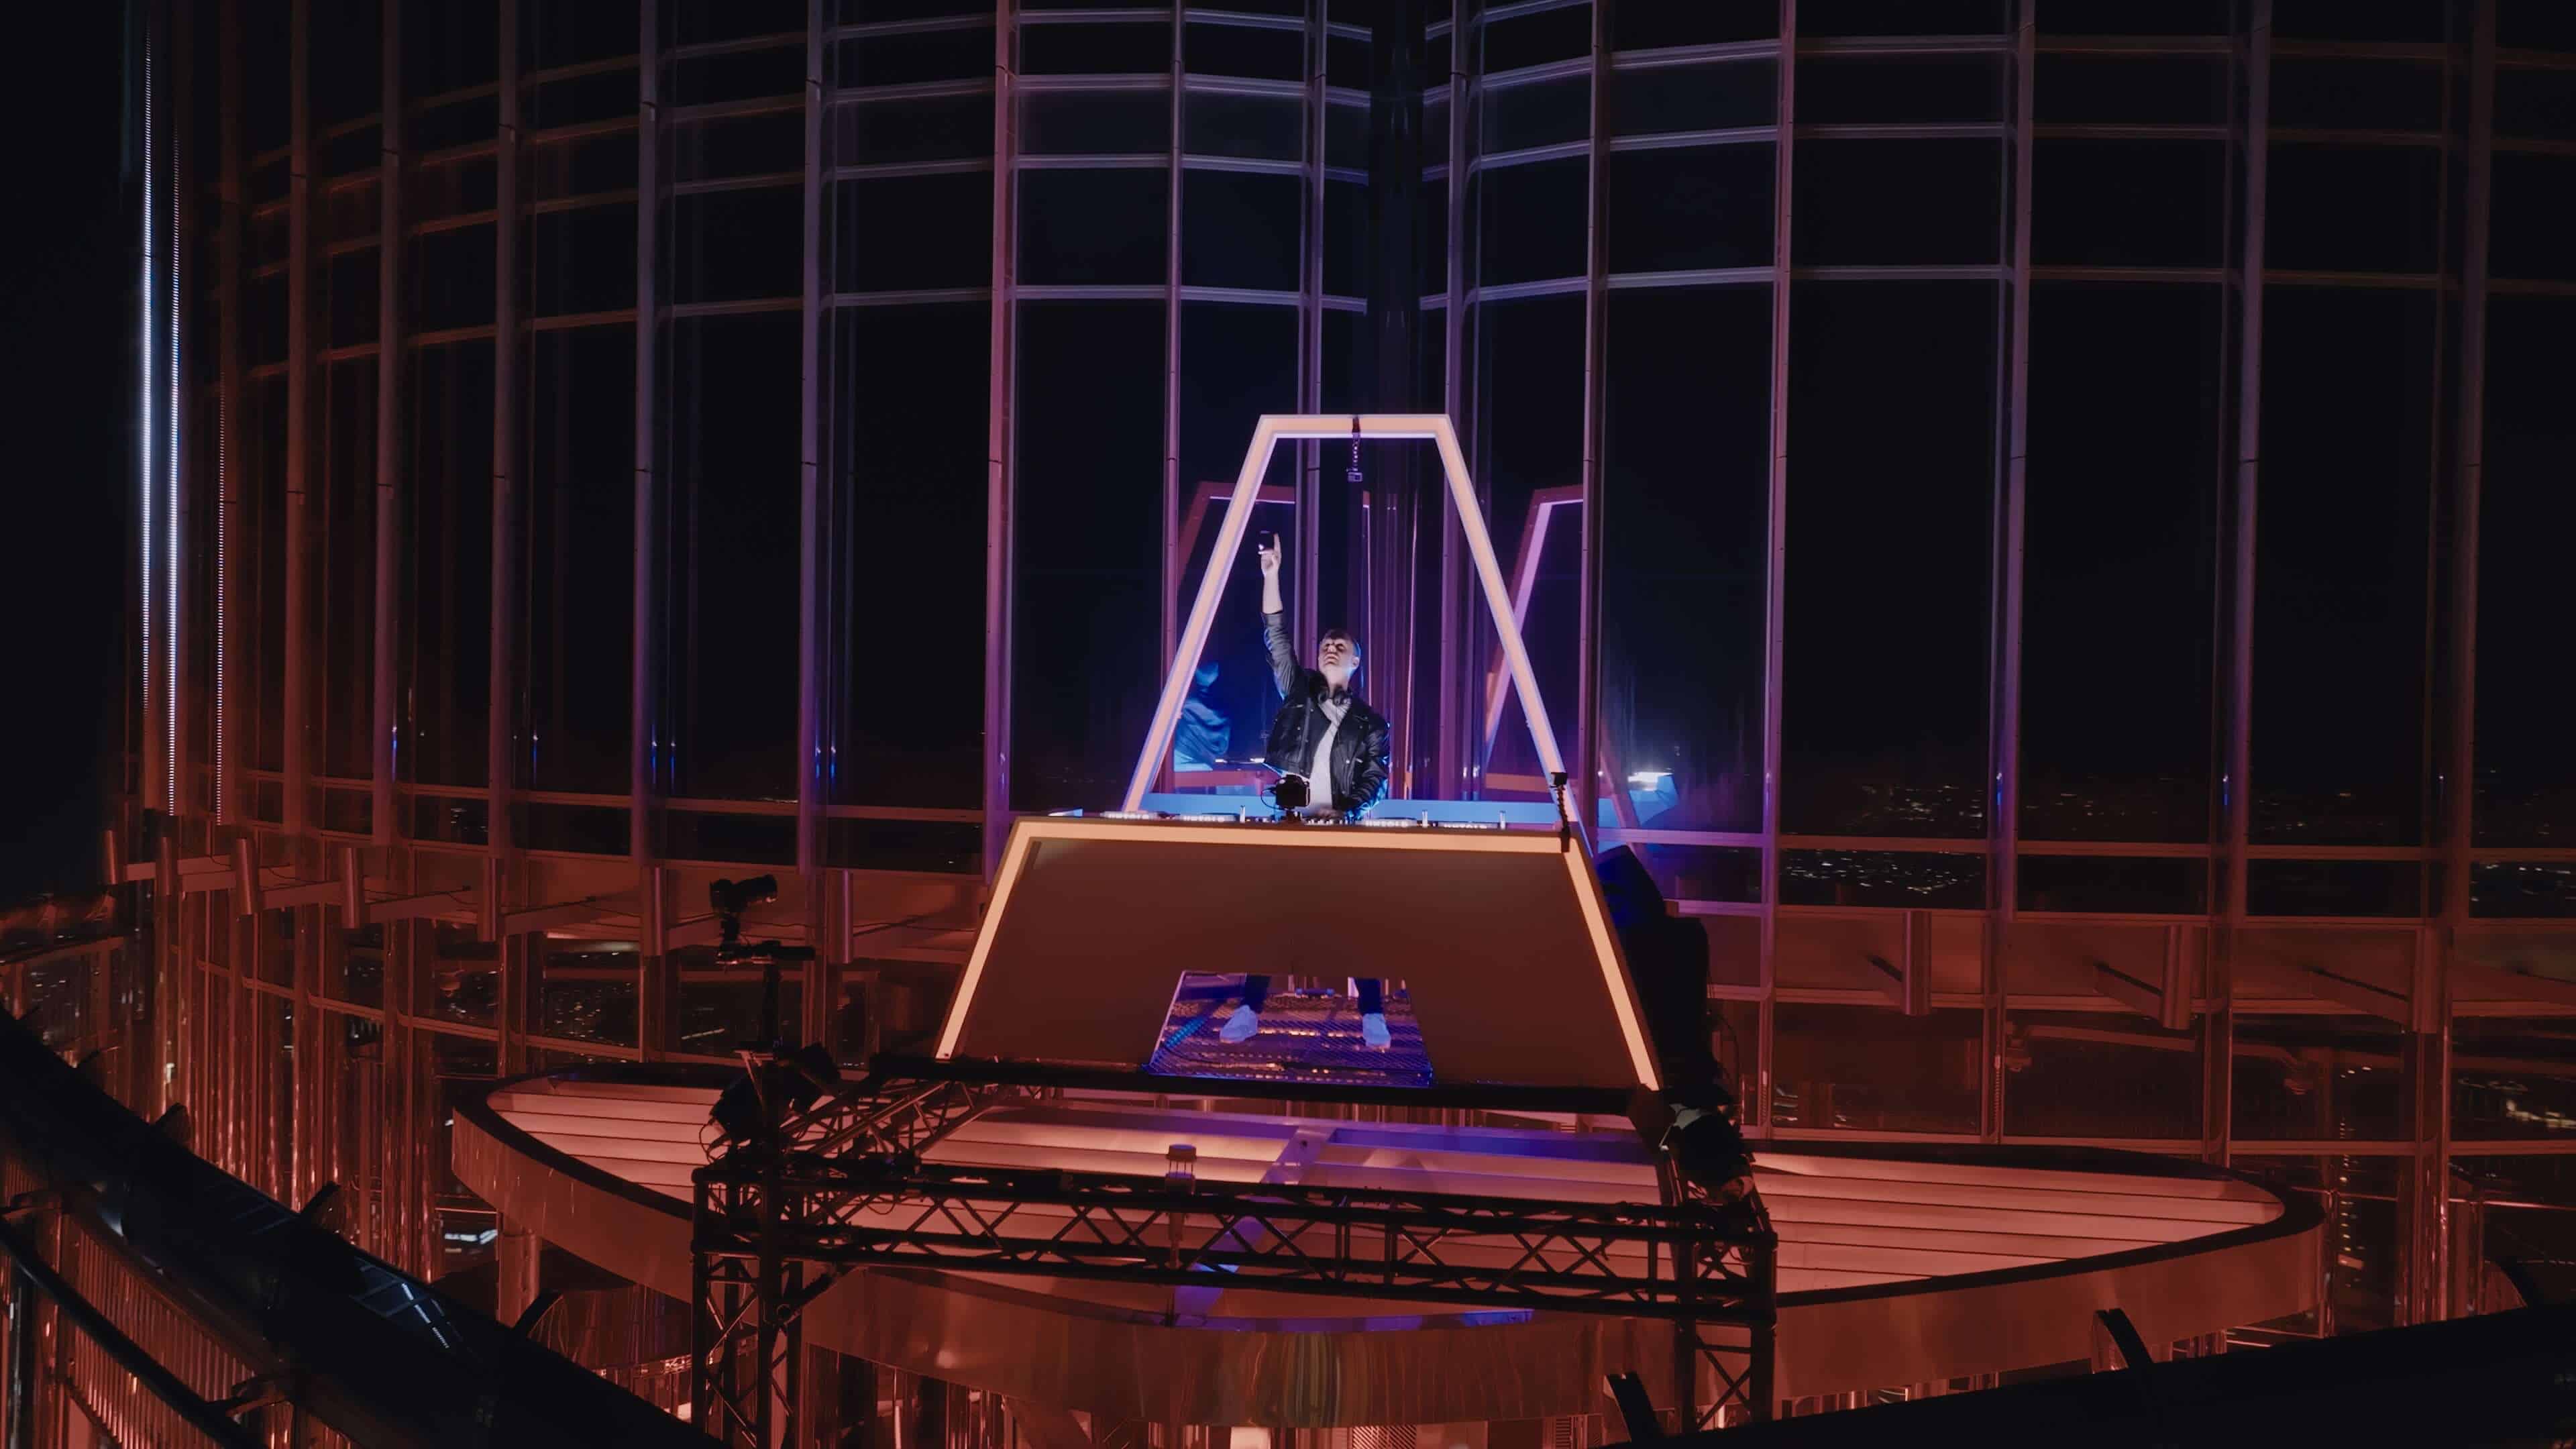 Armin van Buuren & UNTOLD Dubai break 2 world records with performance from Burj Khalifa